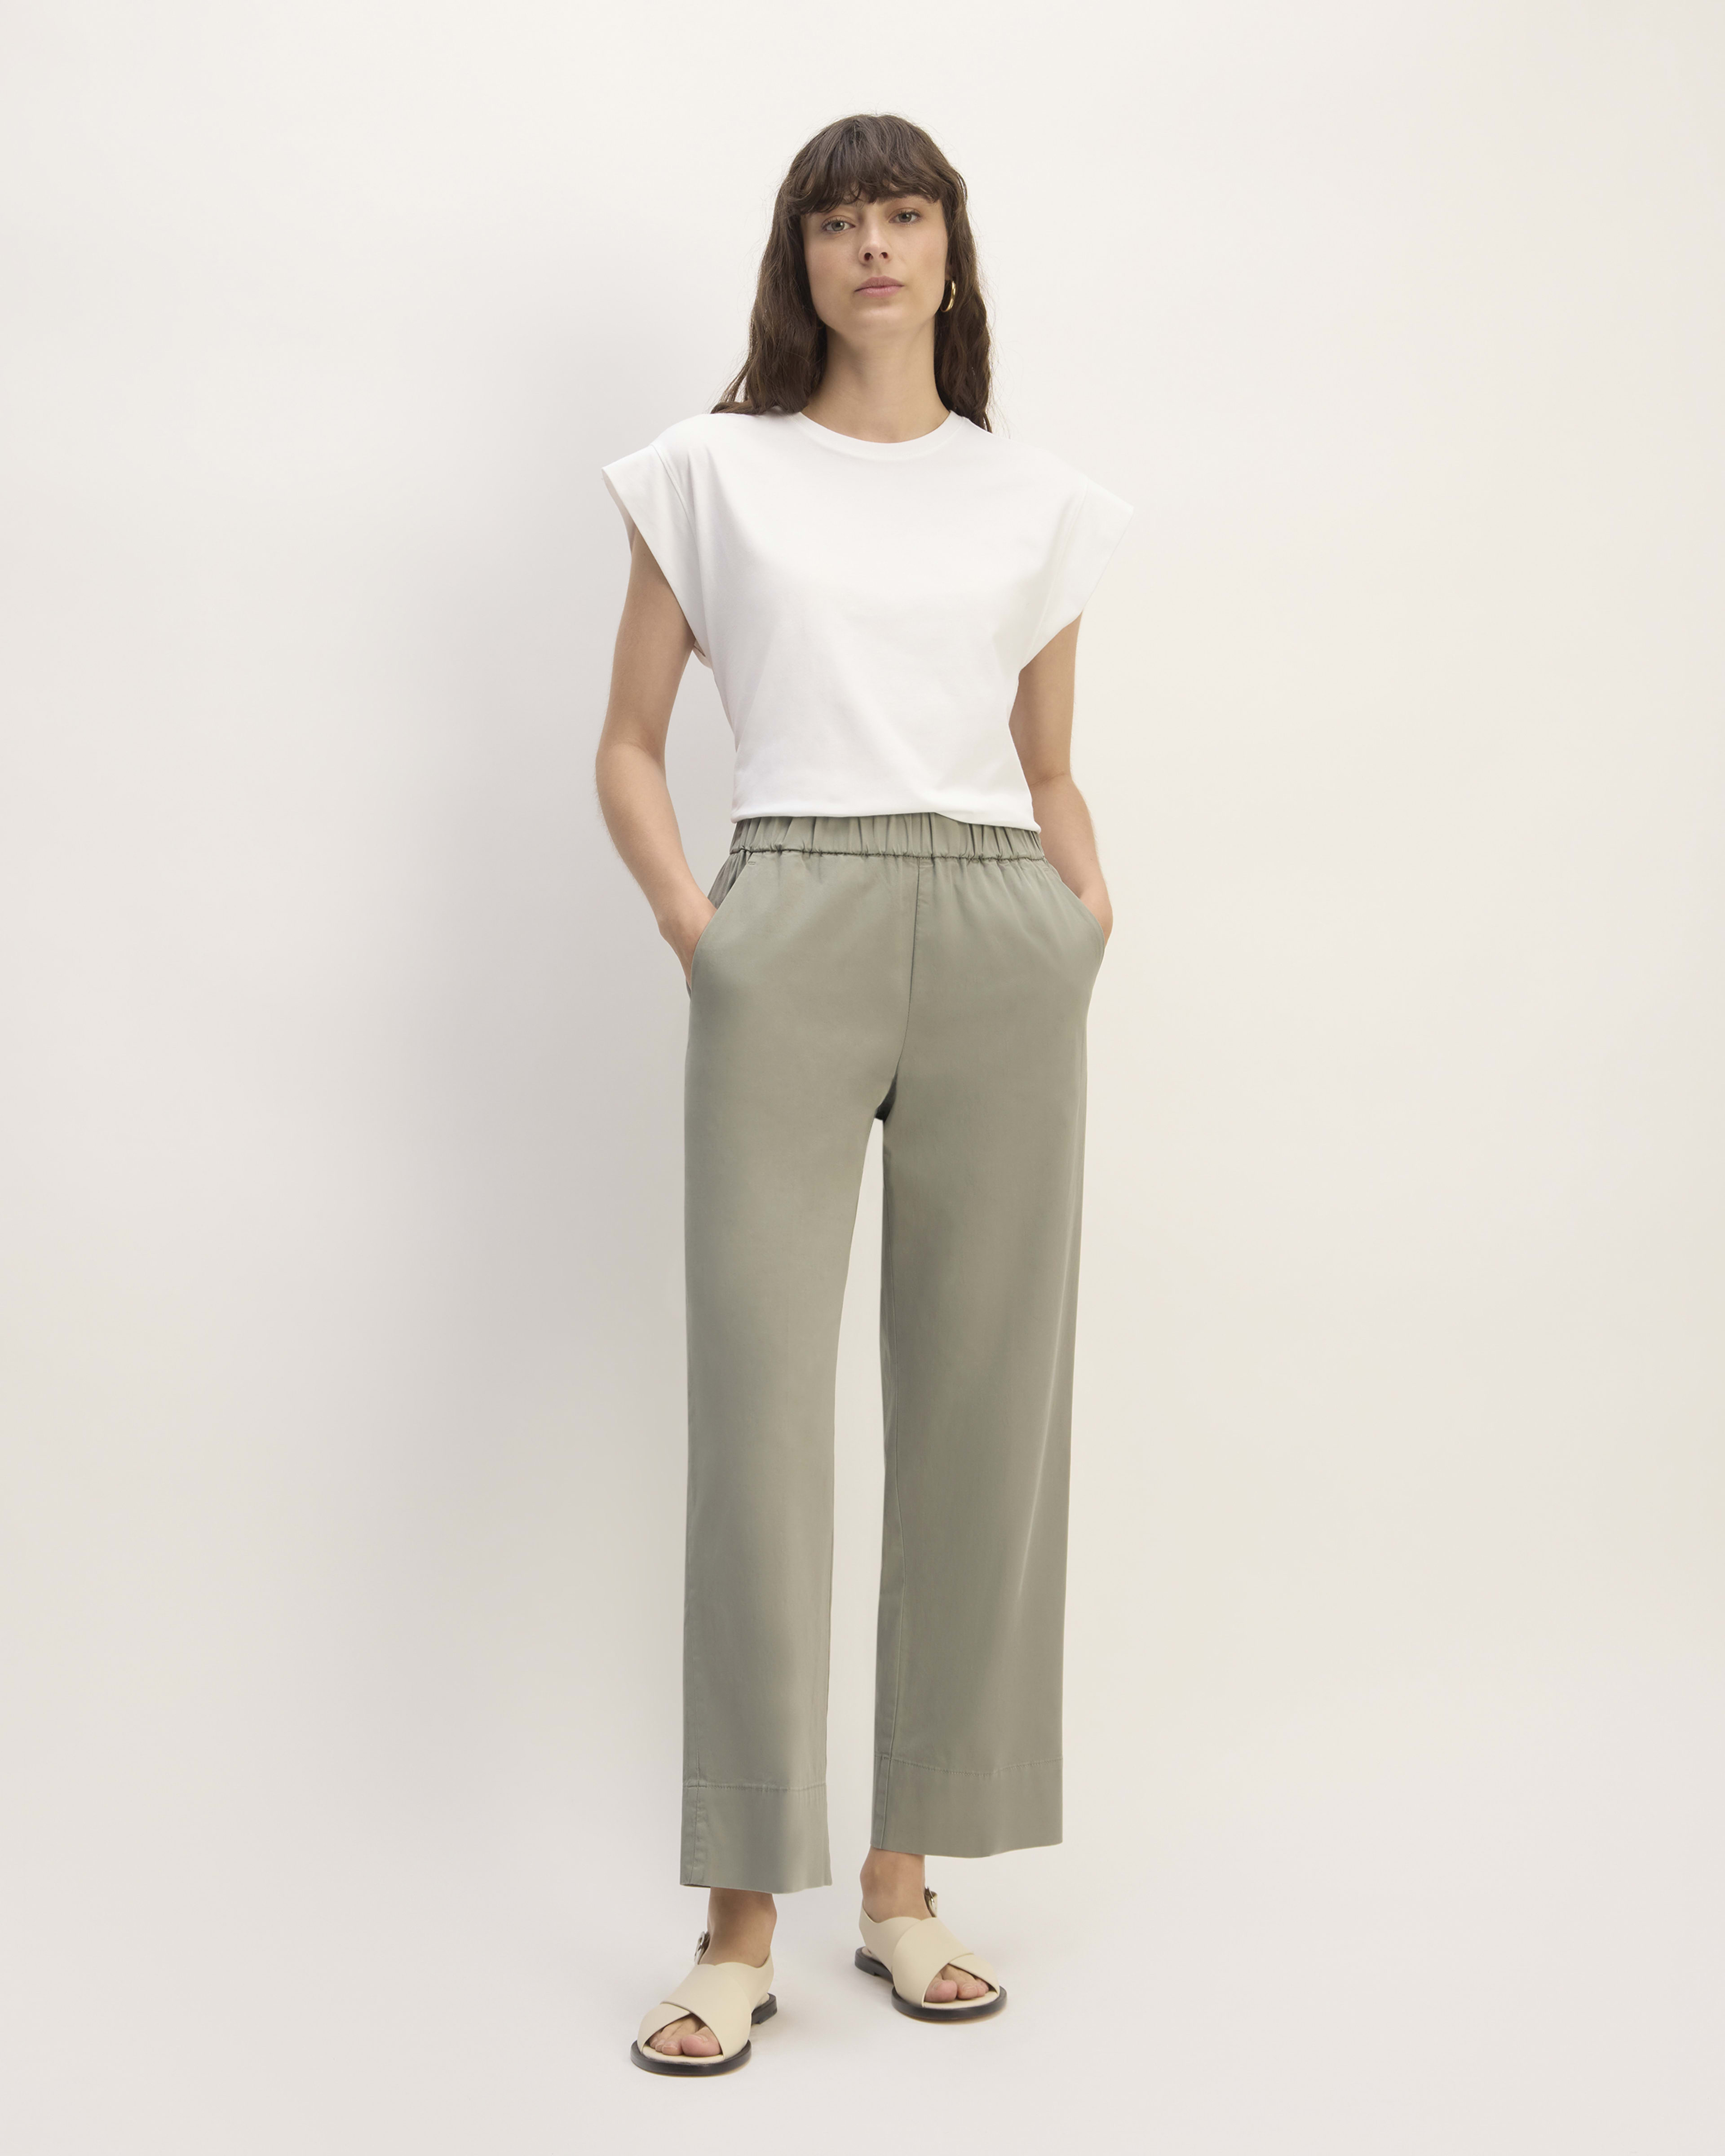 Women's Pants, Shorts & Skirts – Everlane